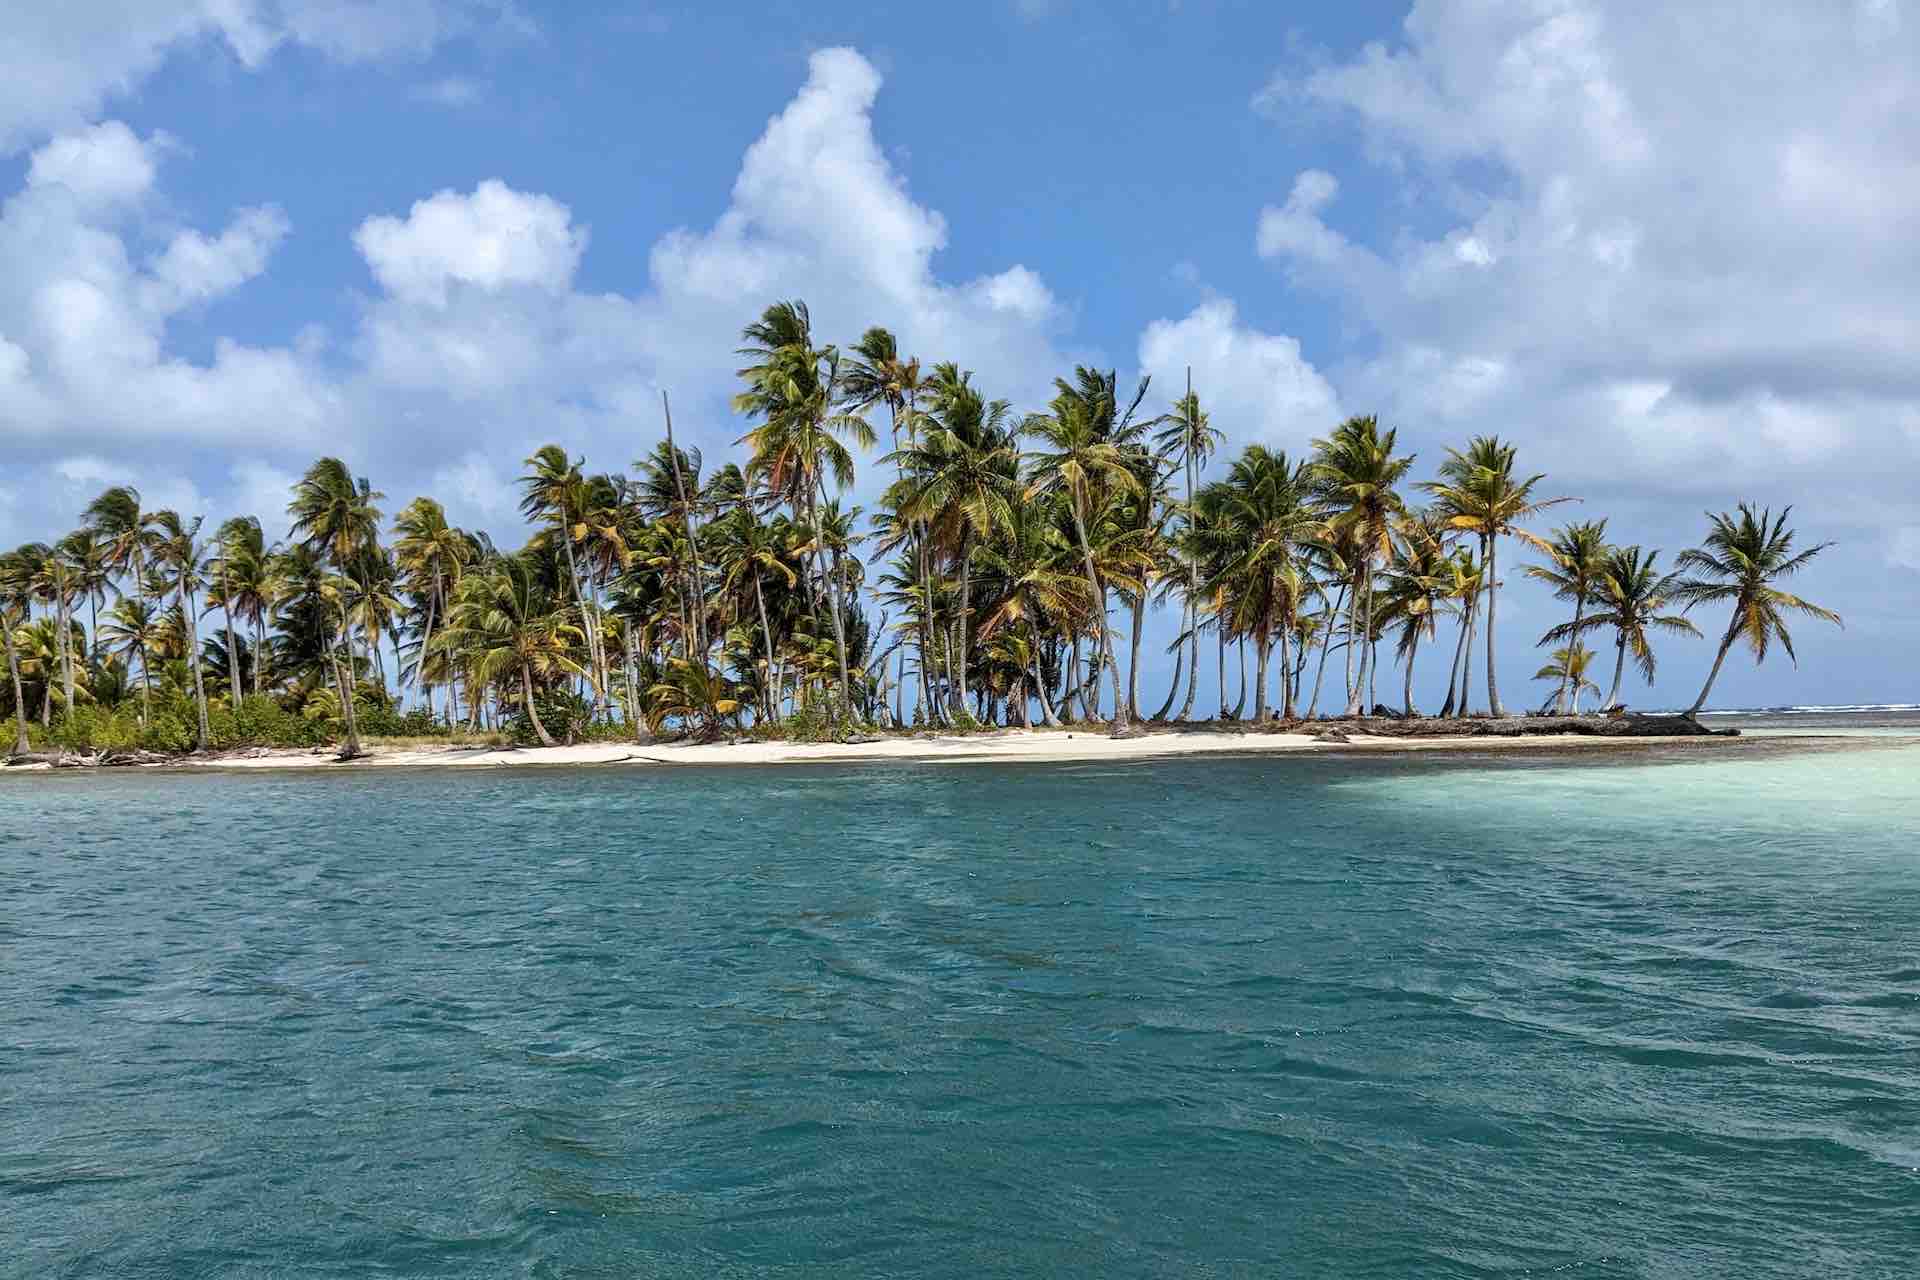 Isla Miryadup San Blas vacation island private cabins paradise beach